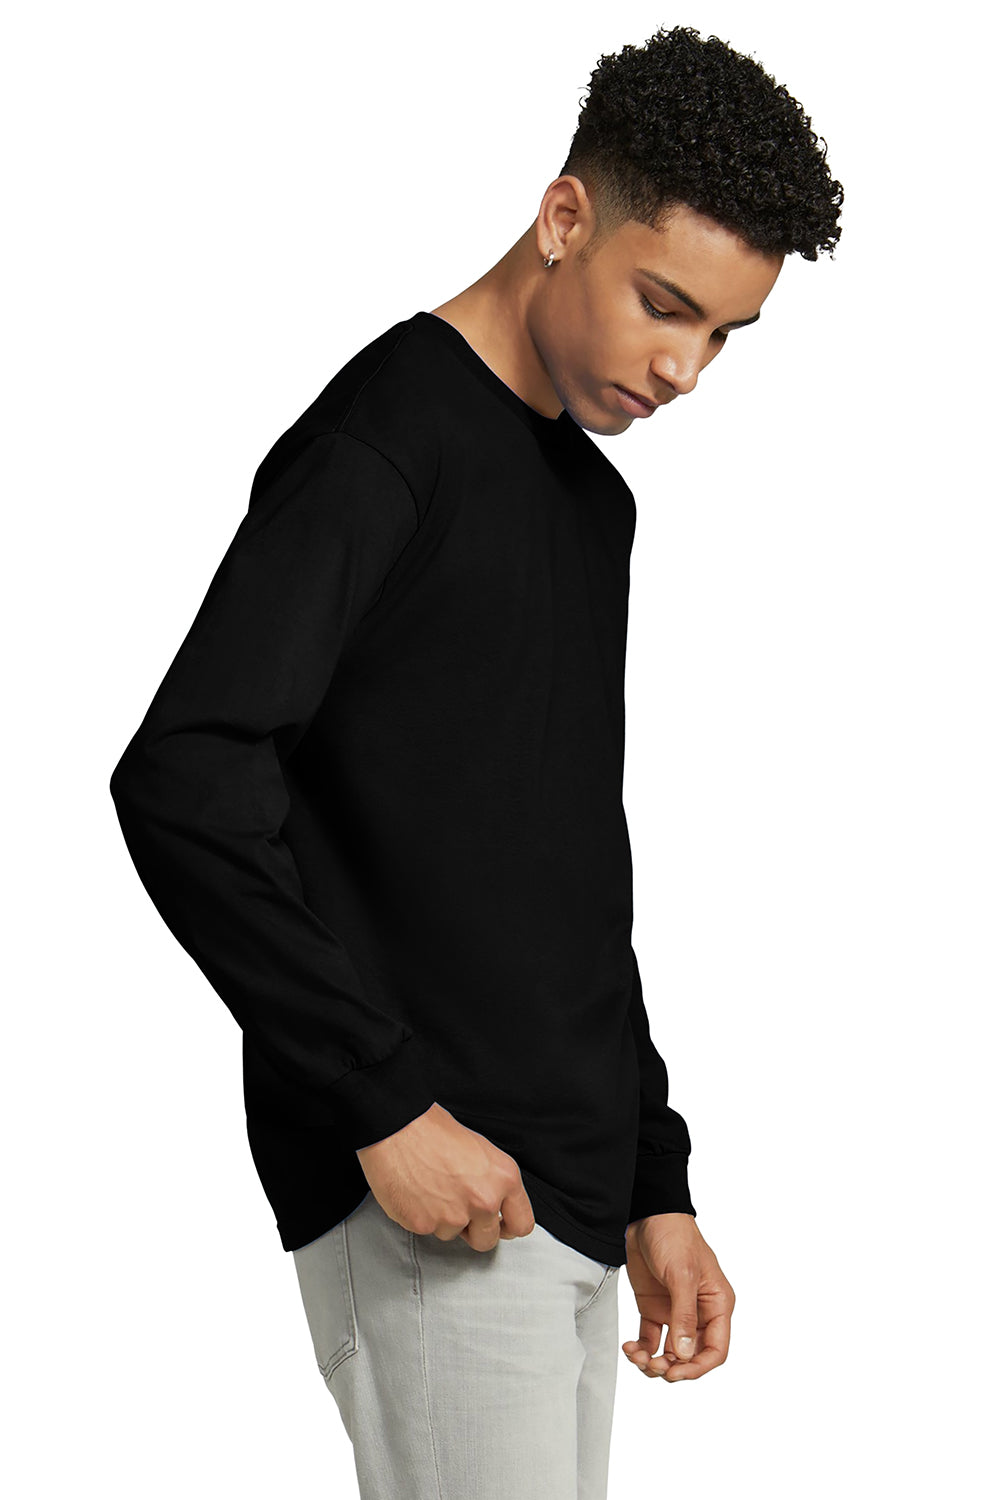 American Apparel AL1304/1304 Mens Long Sleeve Crewneck T-Shirt Black Model Side